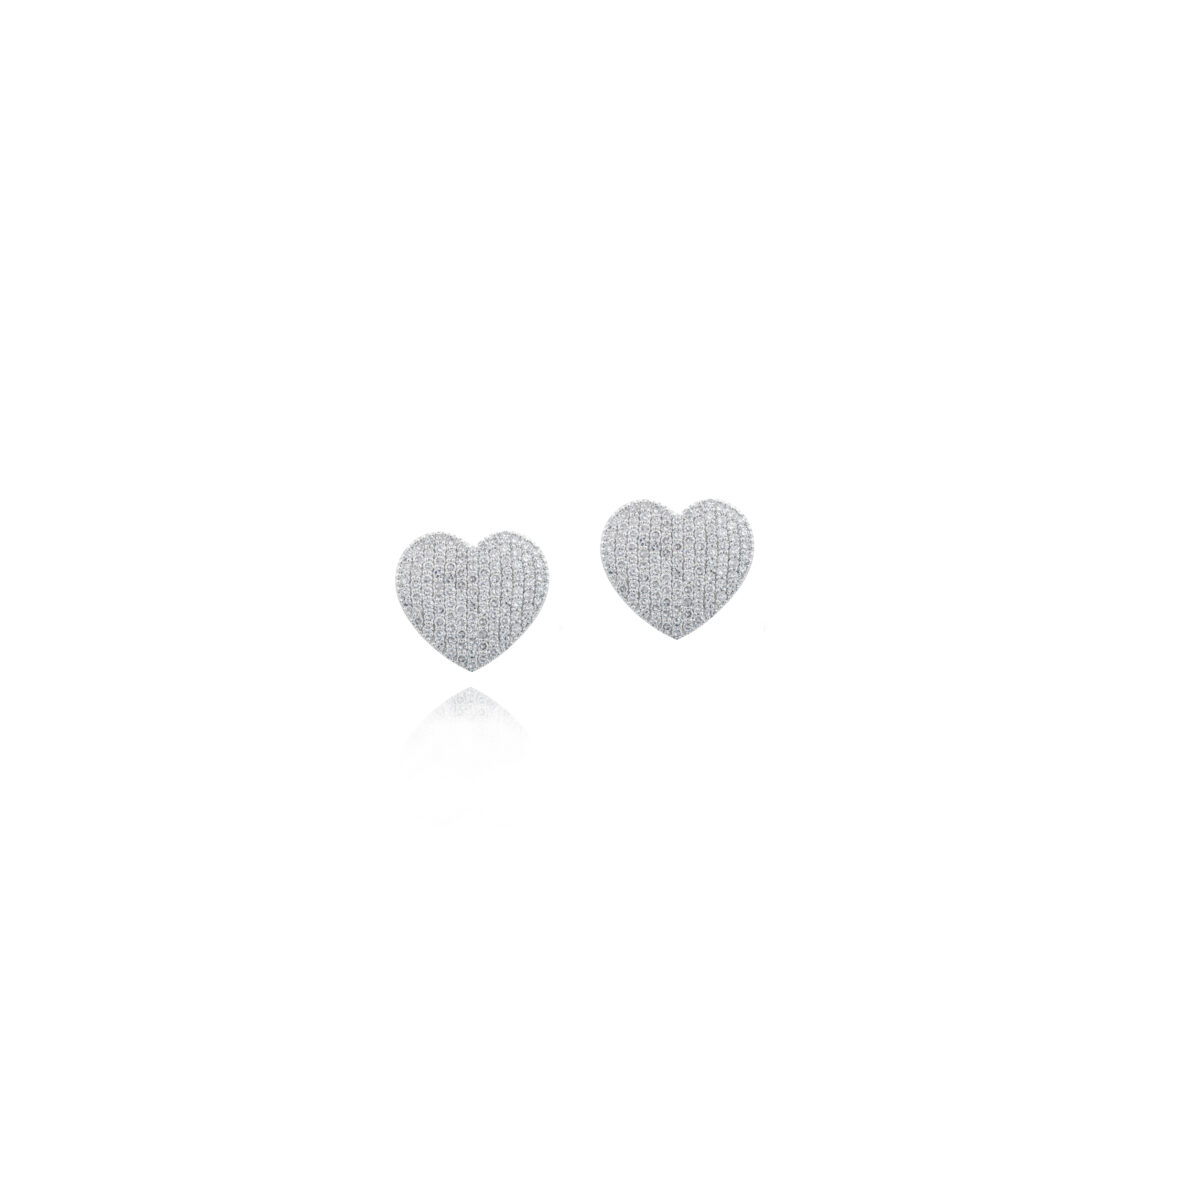 Phillips House Mini Infinity Heart Stud Earrings at Meridian Jewelers